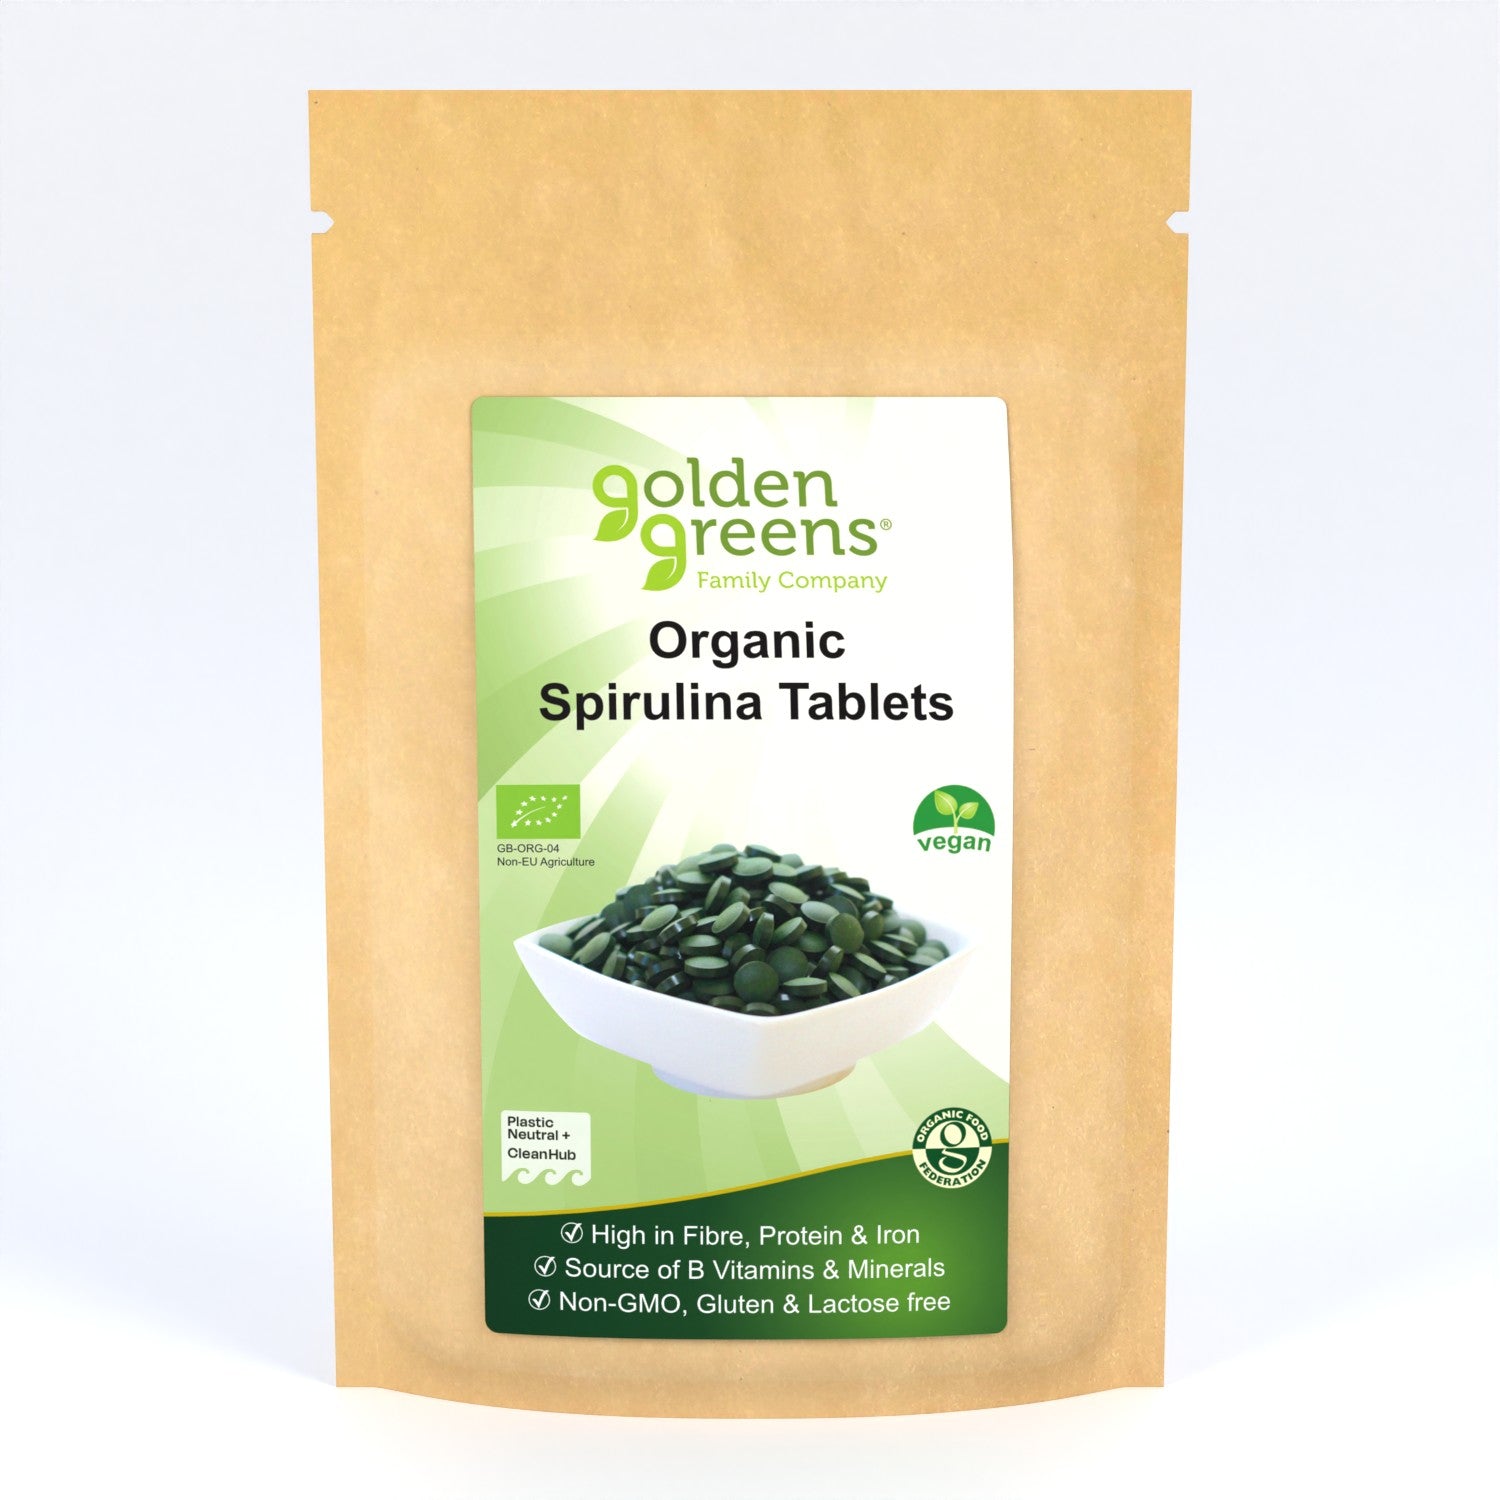 View Organic Spirulina Tablets 500mg information